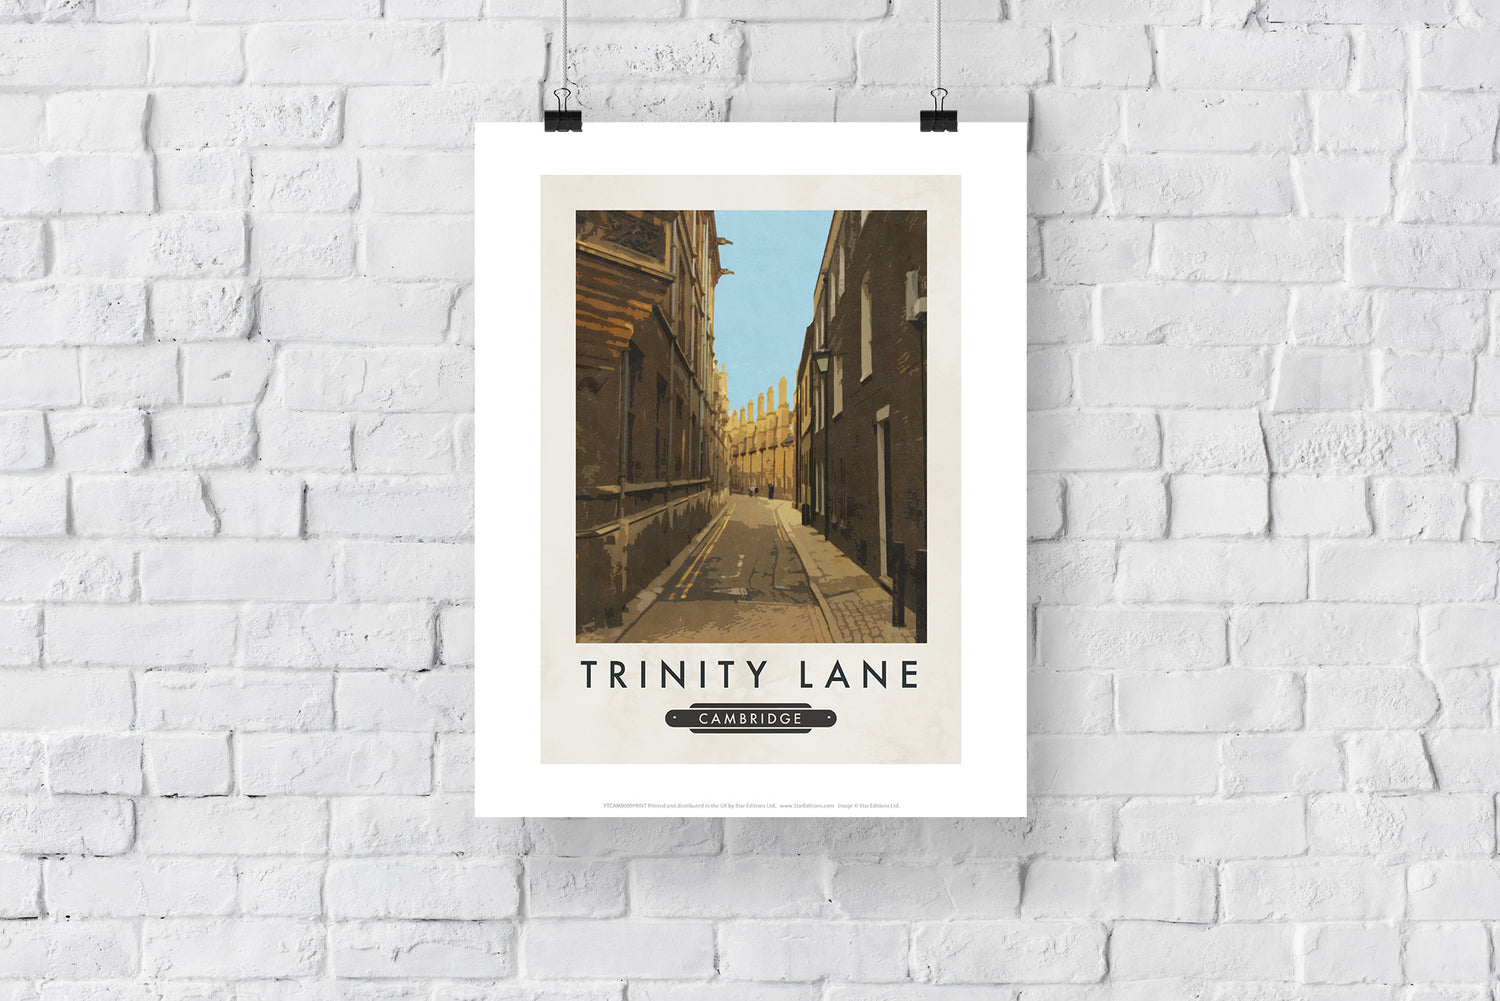 Trinity Lane, Cambridge - Art Print